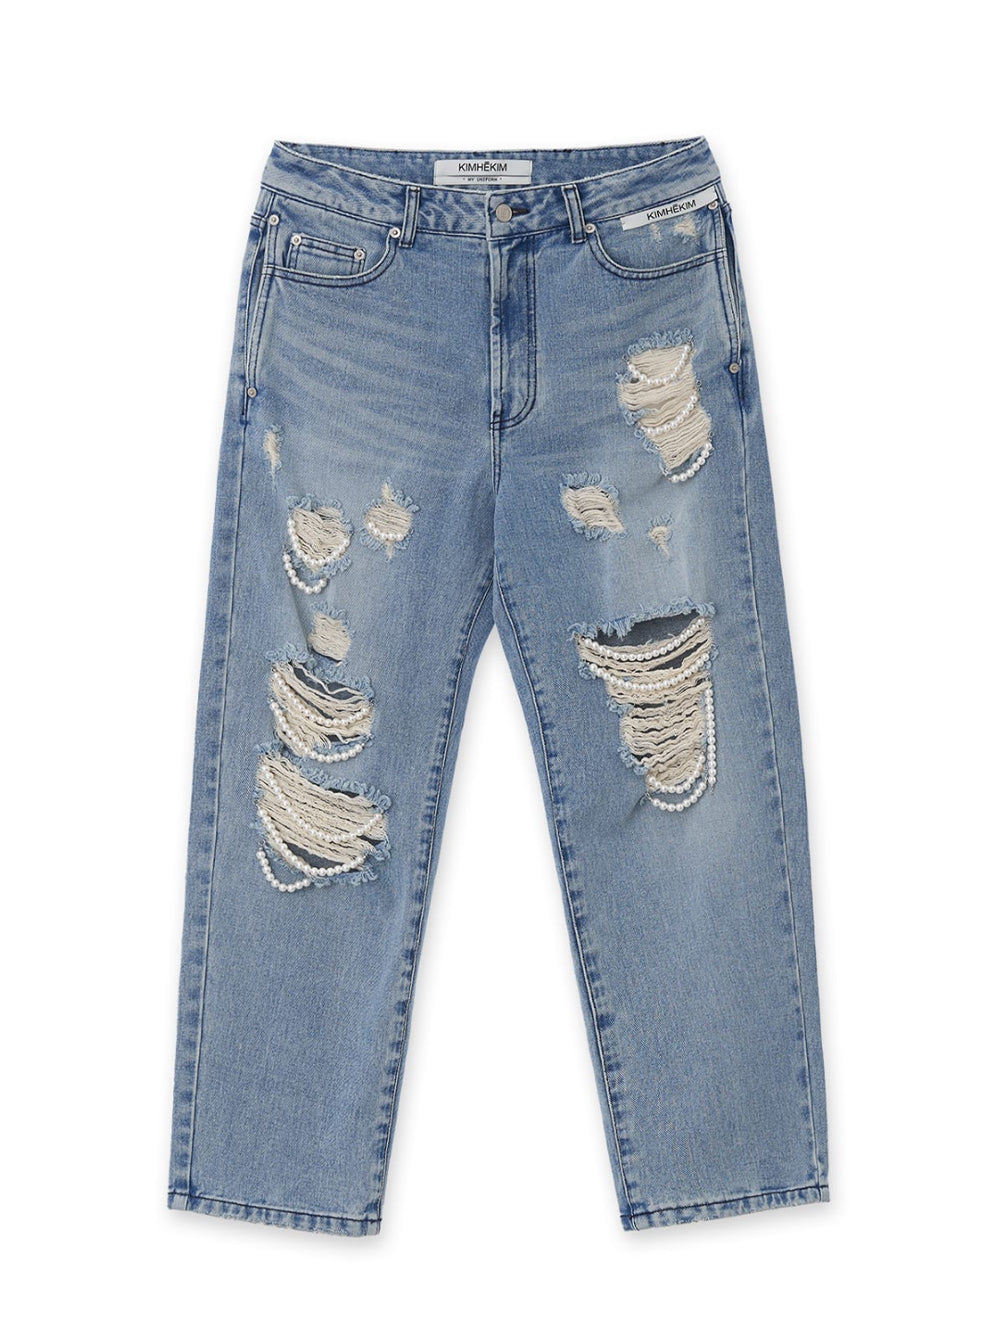 Pearl Embroidered Destroyed Denim Pants (Sky Blue)